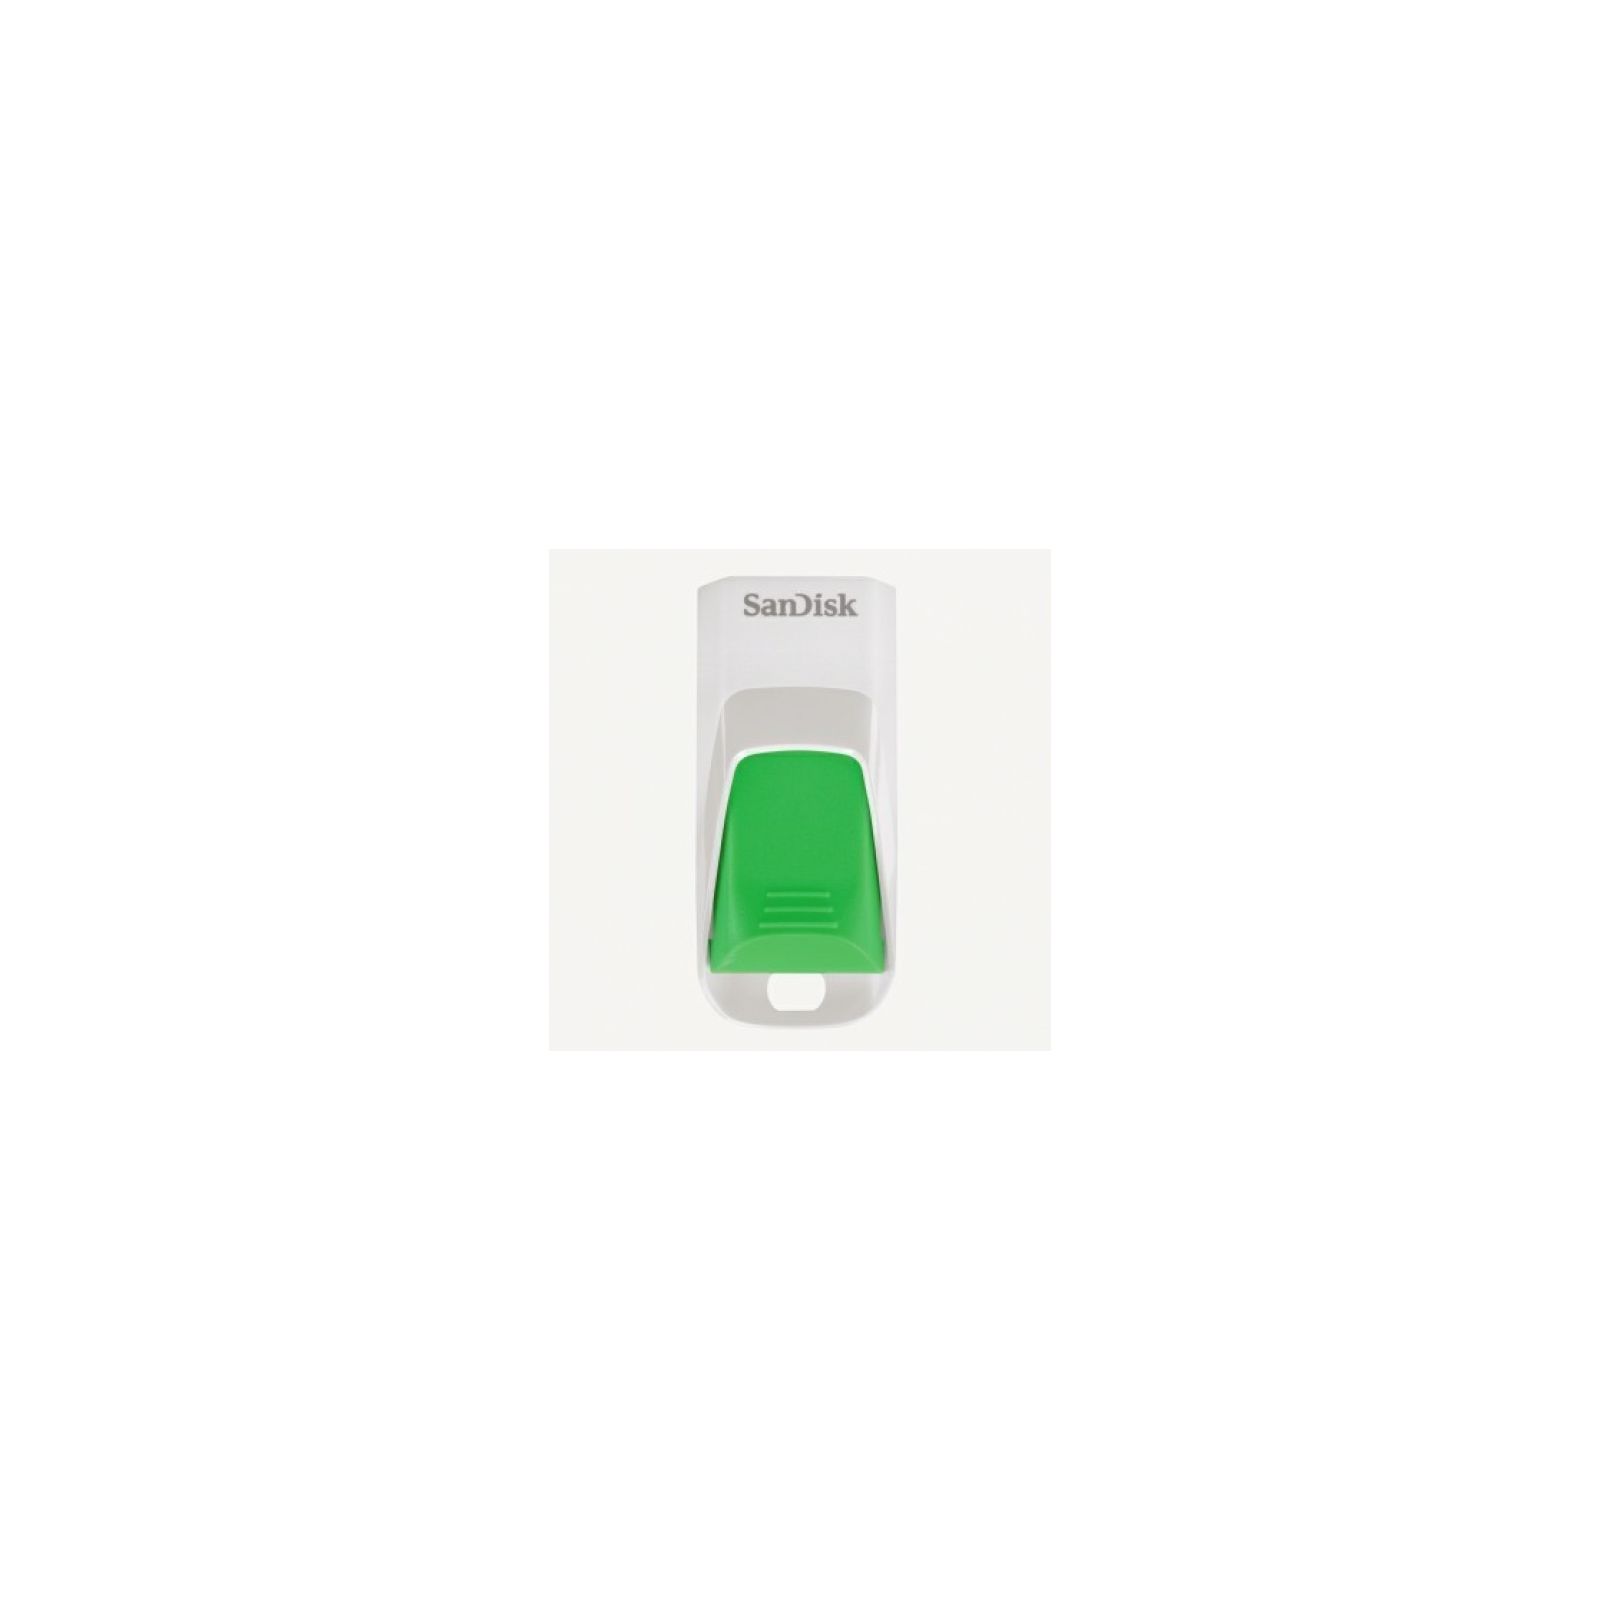 SanDisk Cruzer Edge 16GB White/Green SDCZ51W-016G-B35G USB Memory Stick